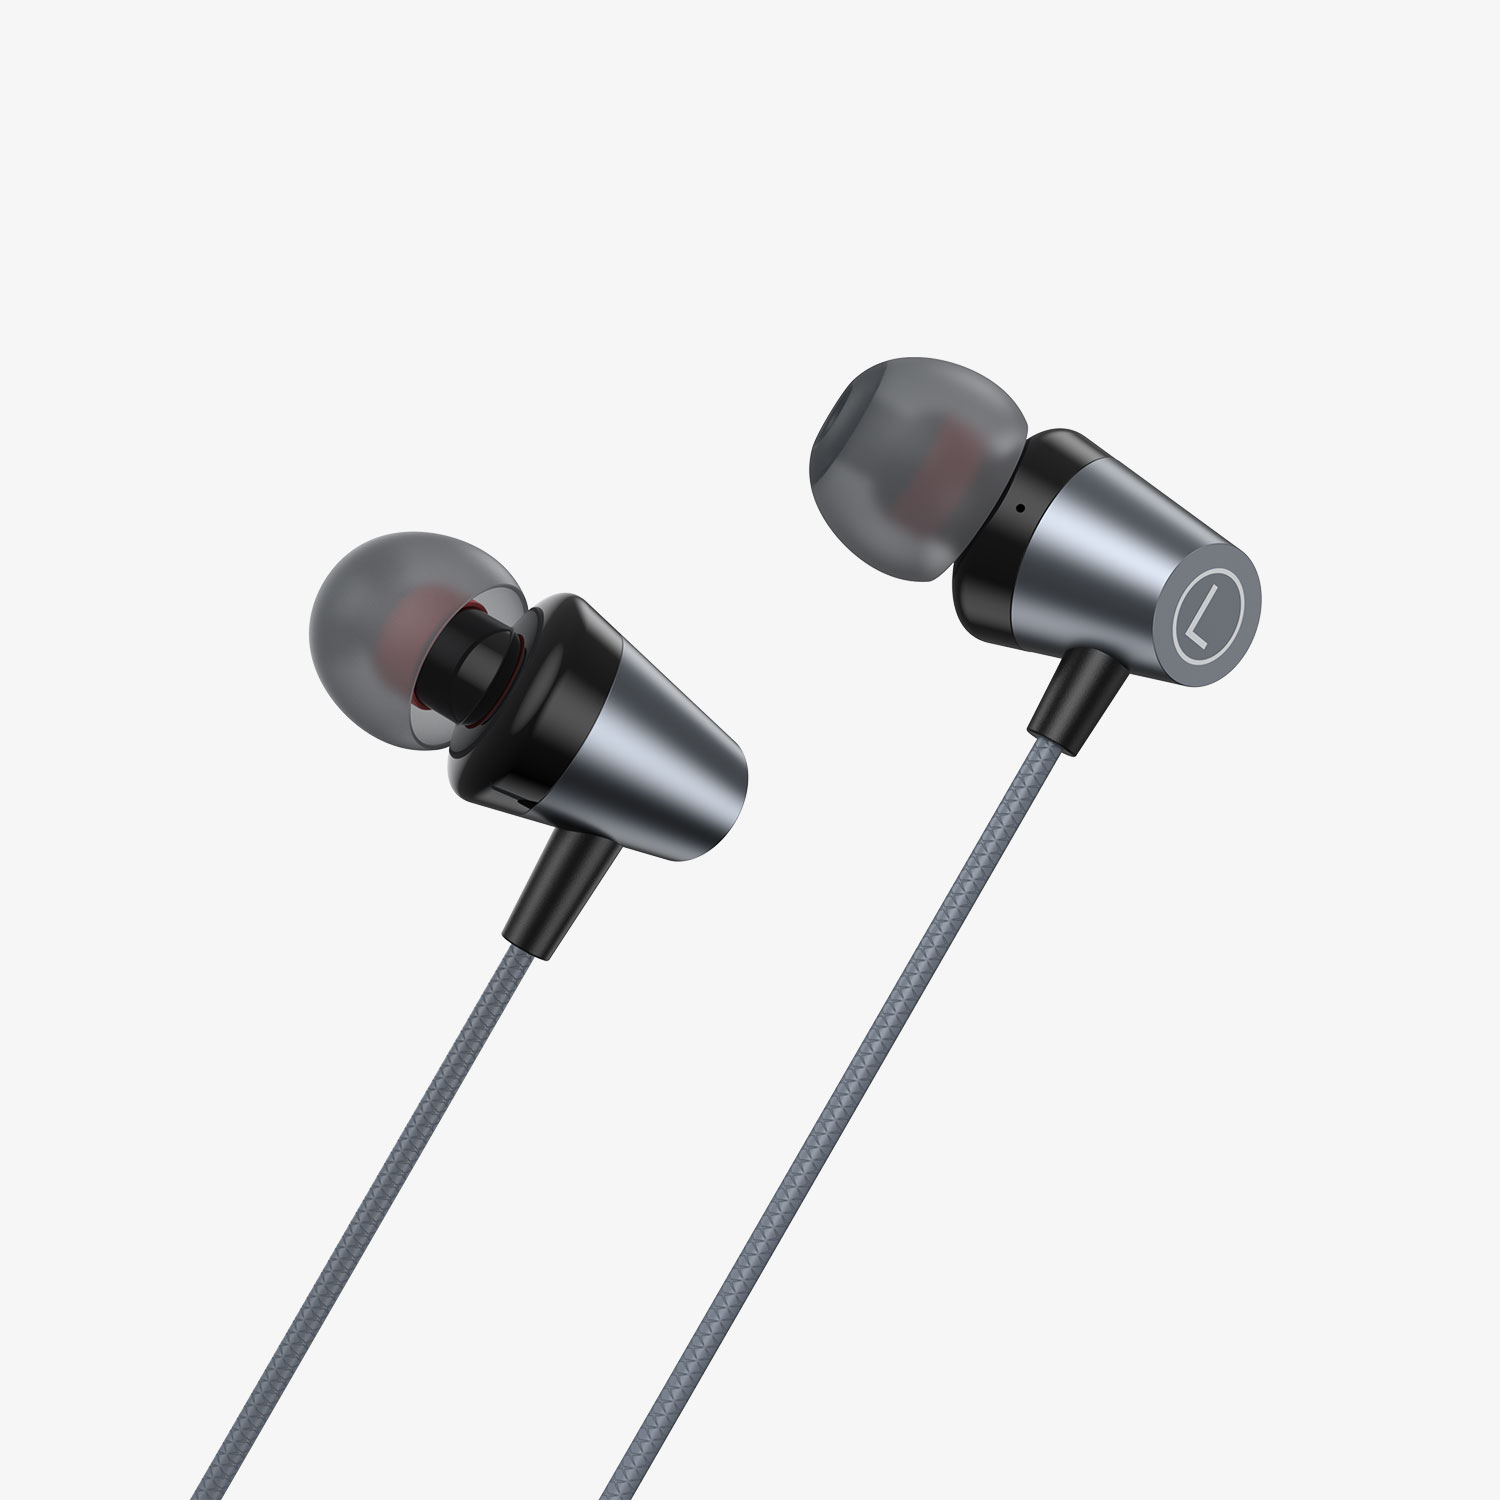 Hi-Fi sound quality wired earbuds